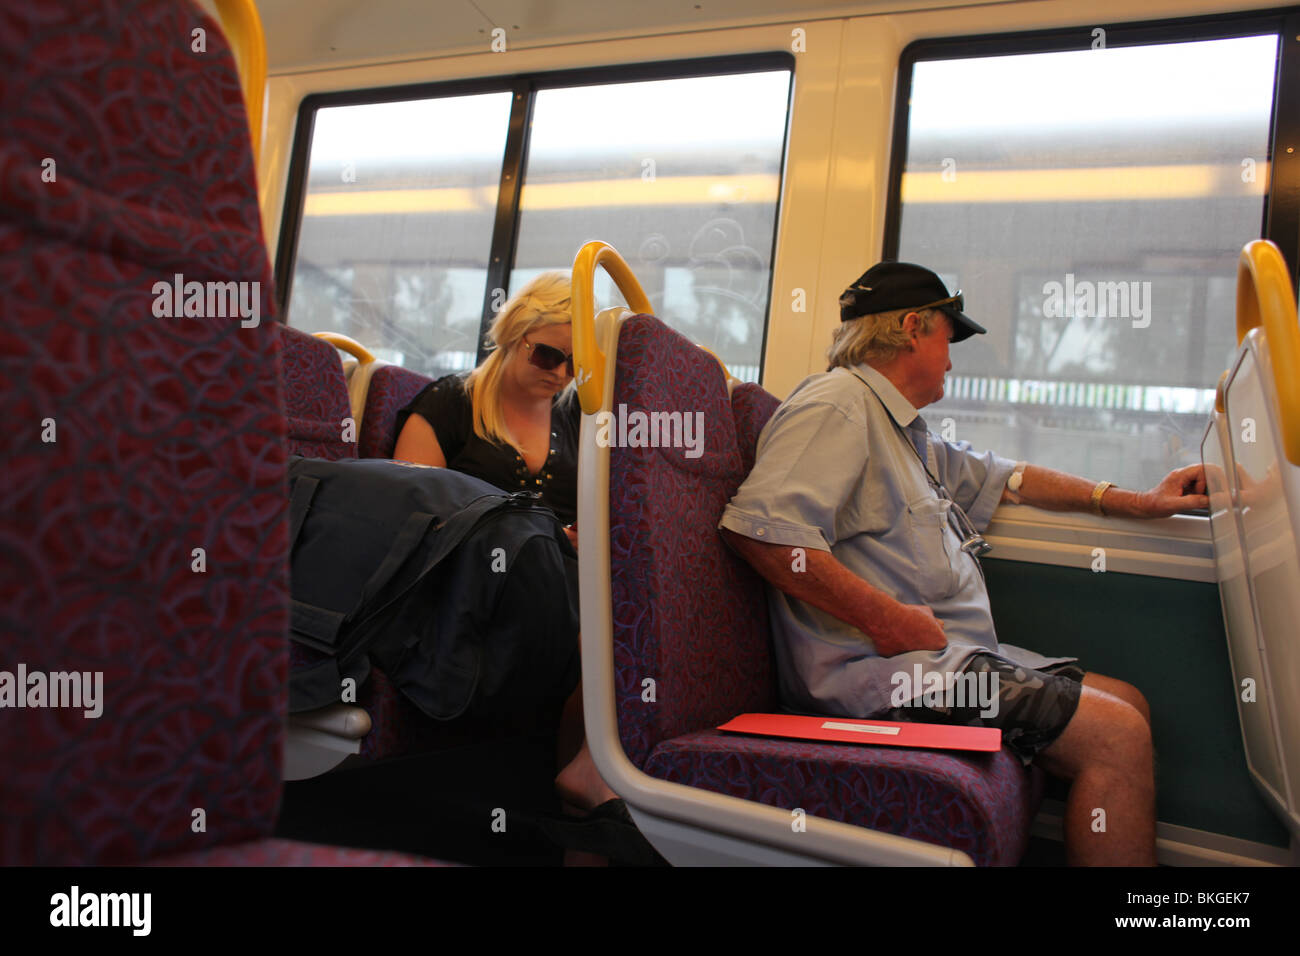 People on the train from Brisbane to Gold Coast, Australia Photo - Alamy